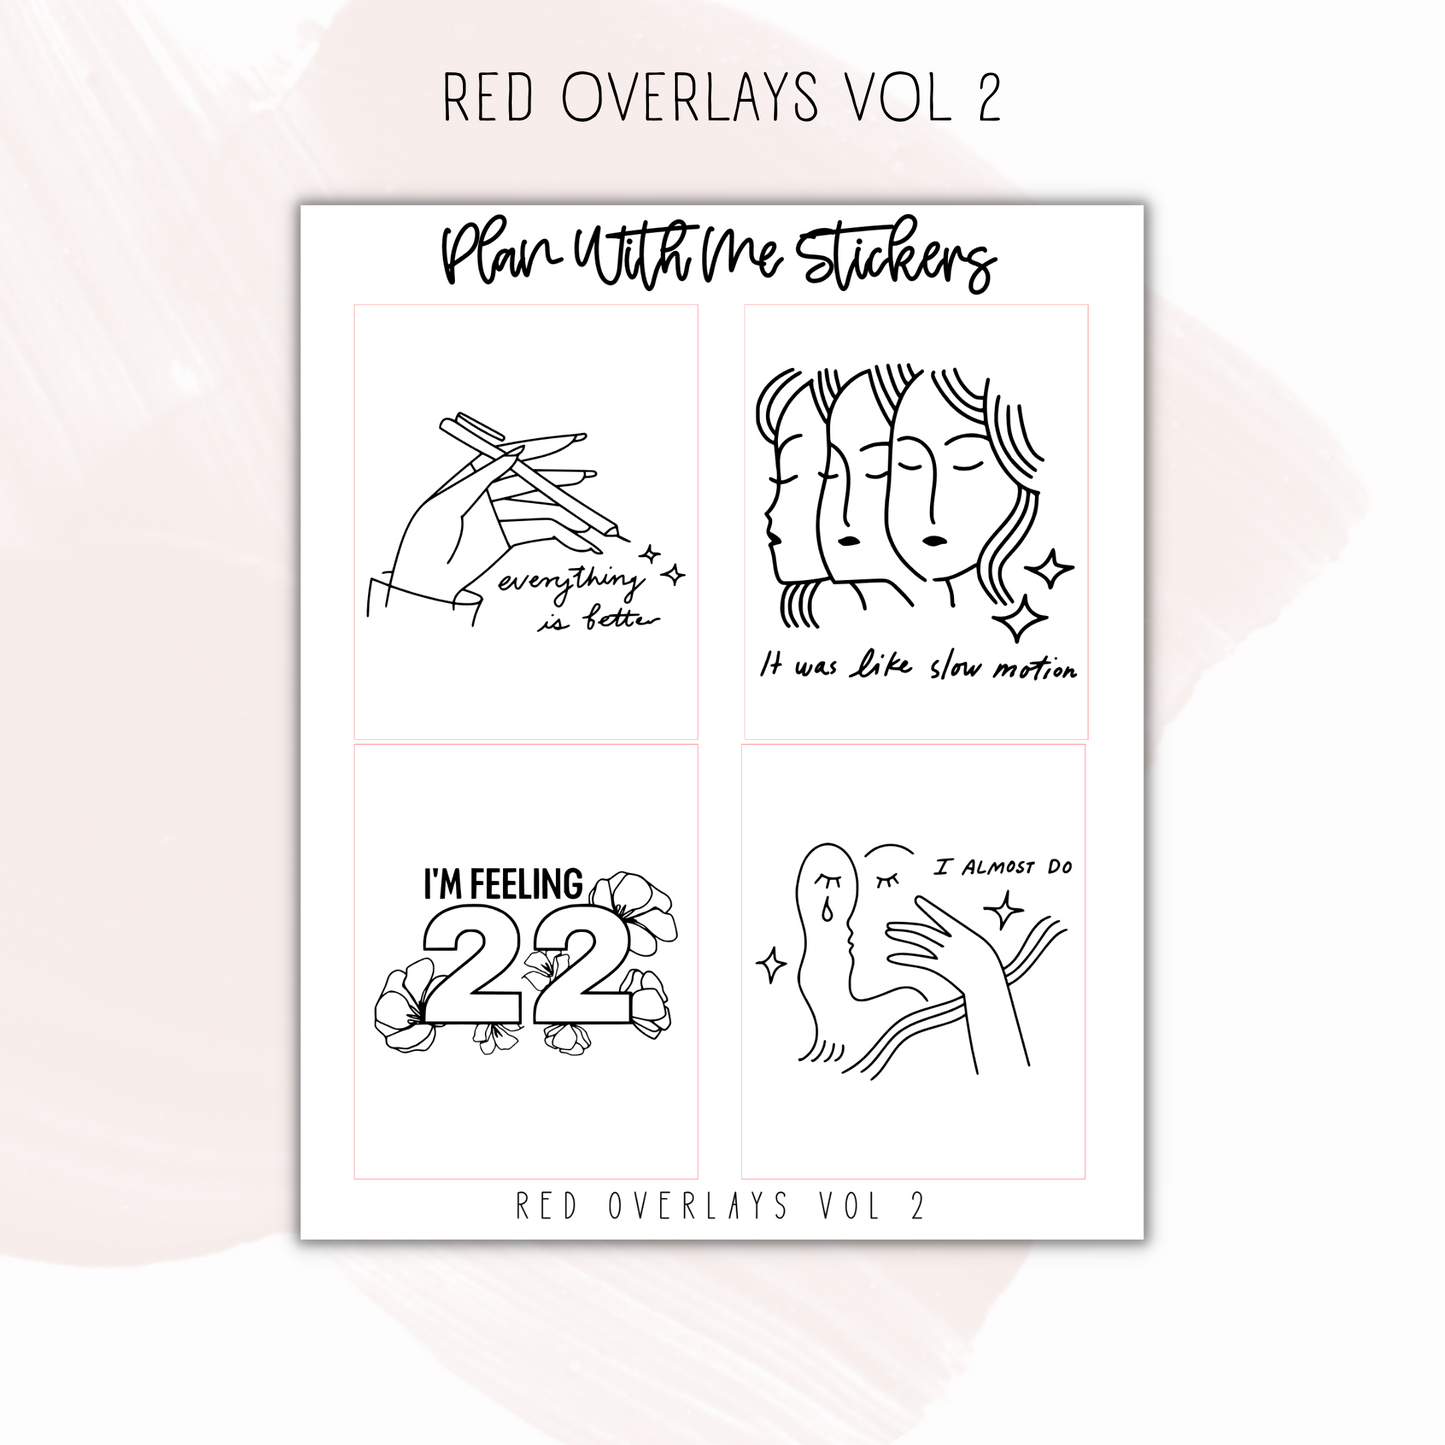 Red Overlays Vol 2